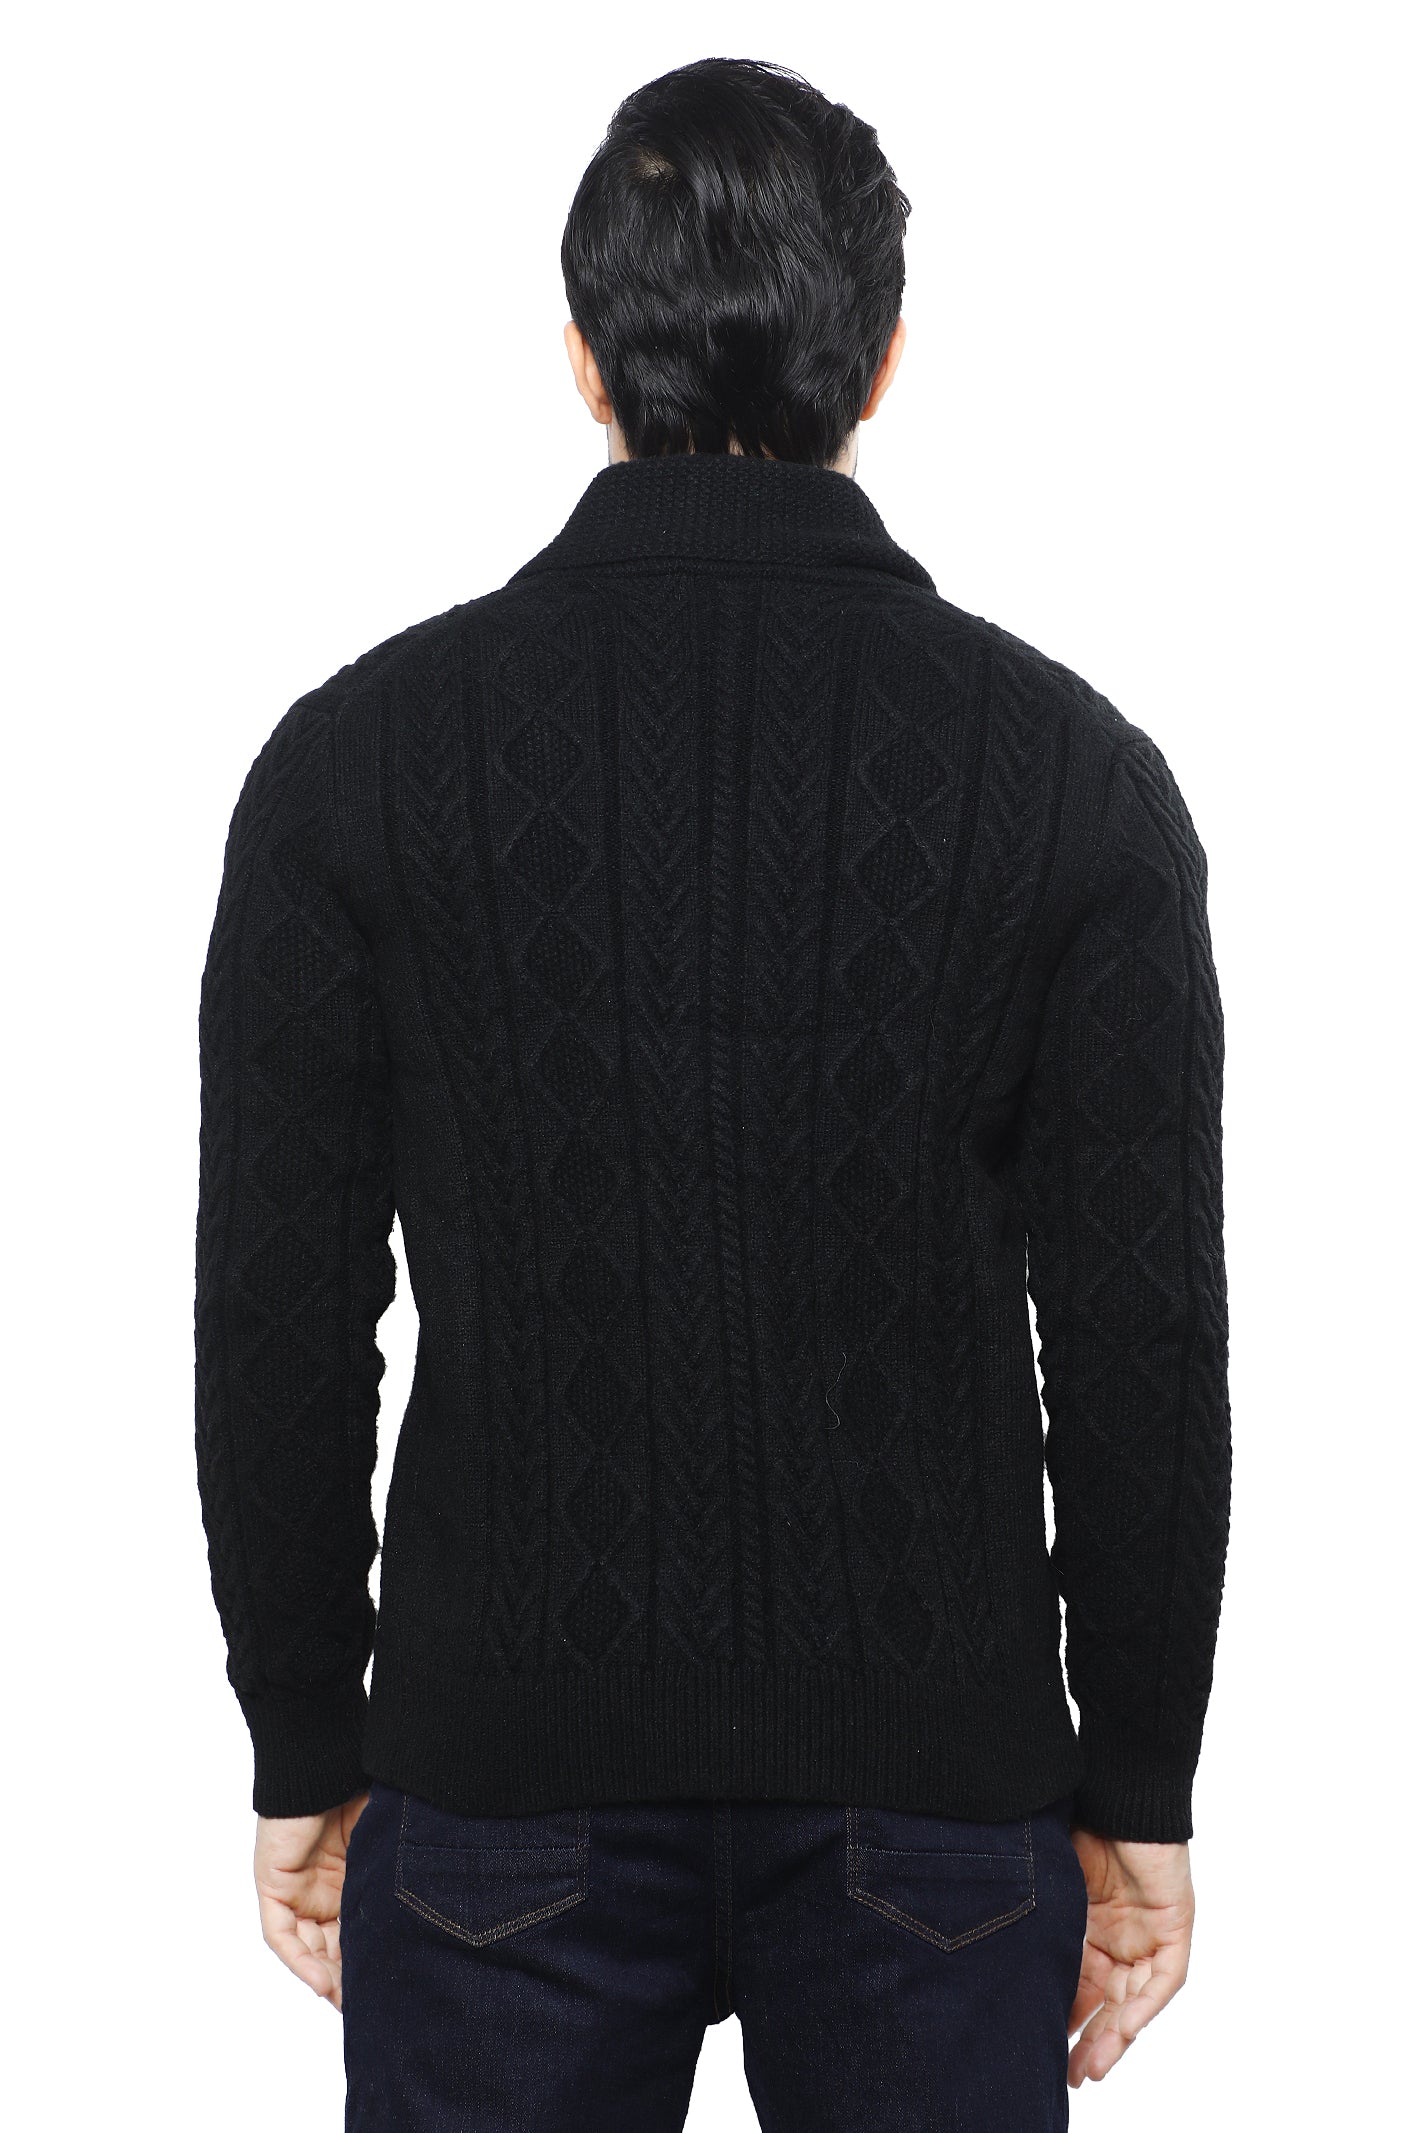 Gents Sweater SKU: SA596-BLACK - Diners